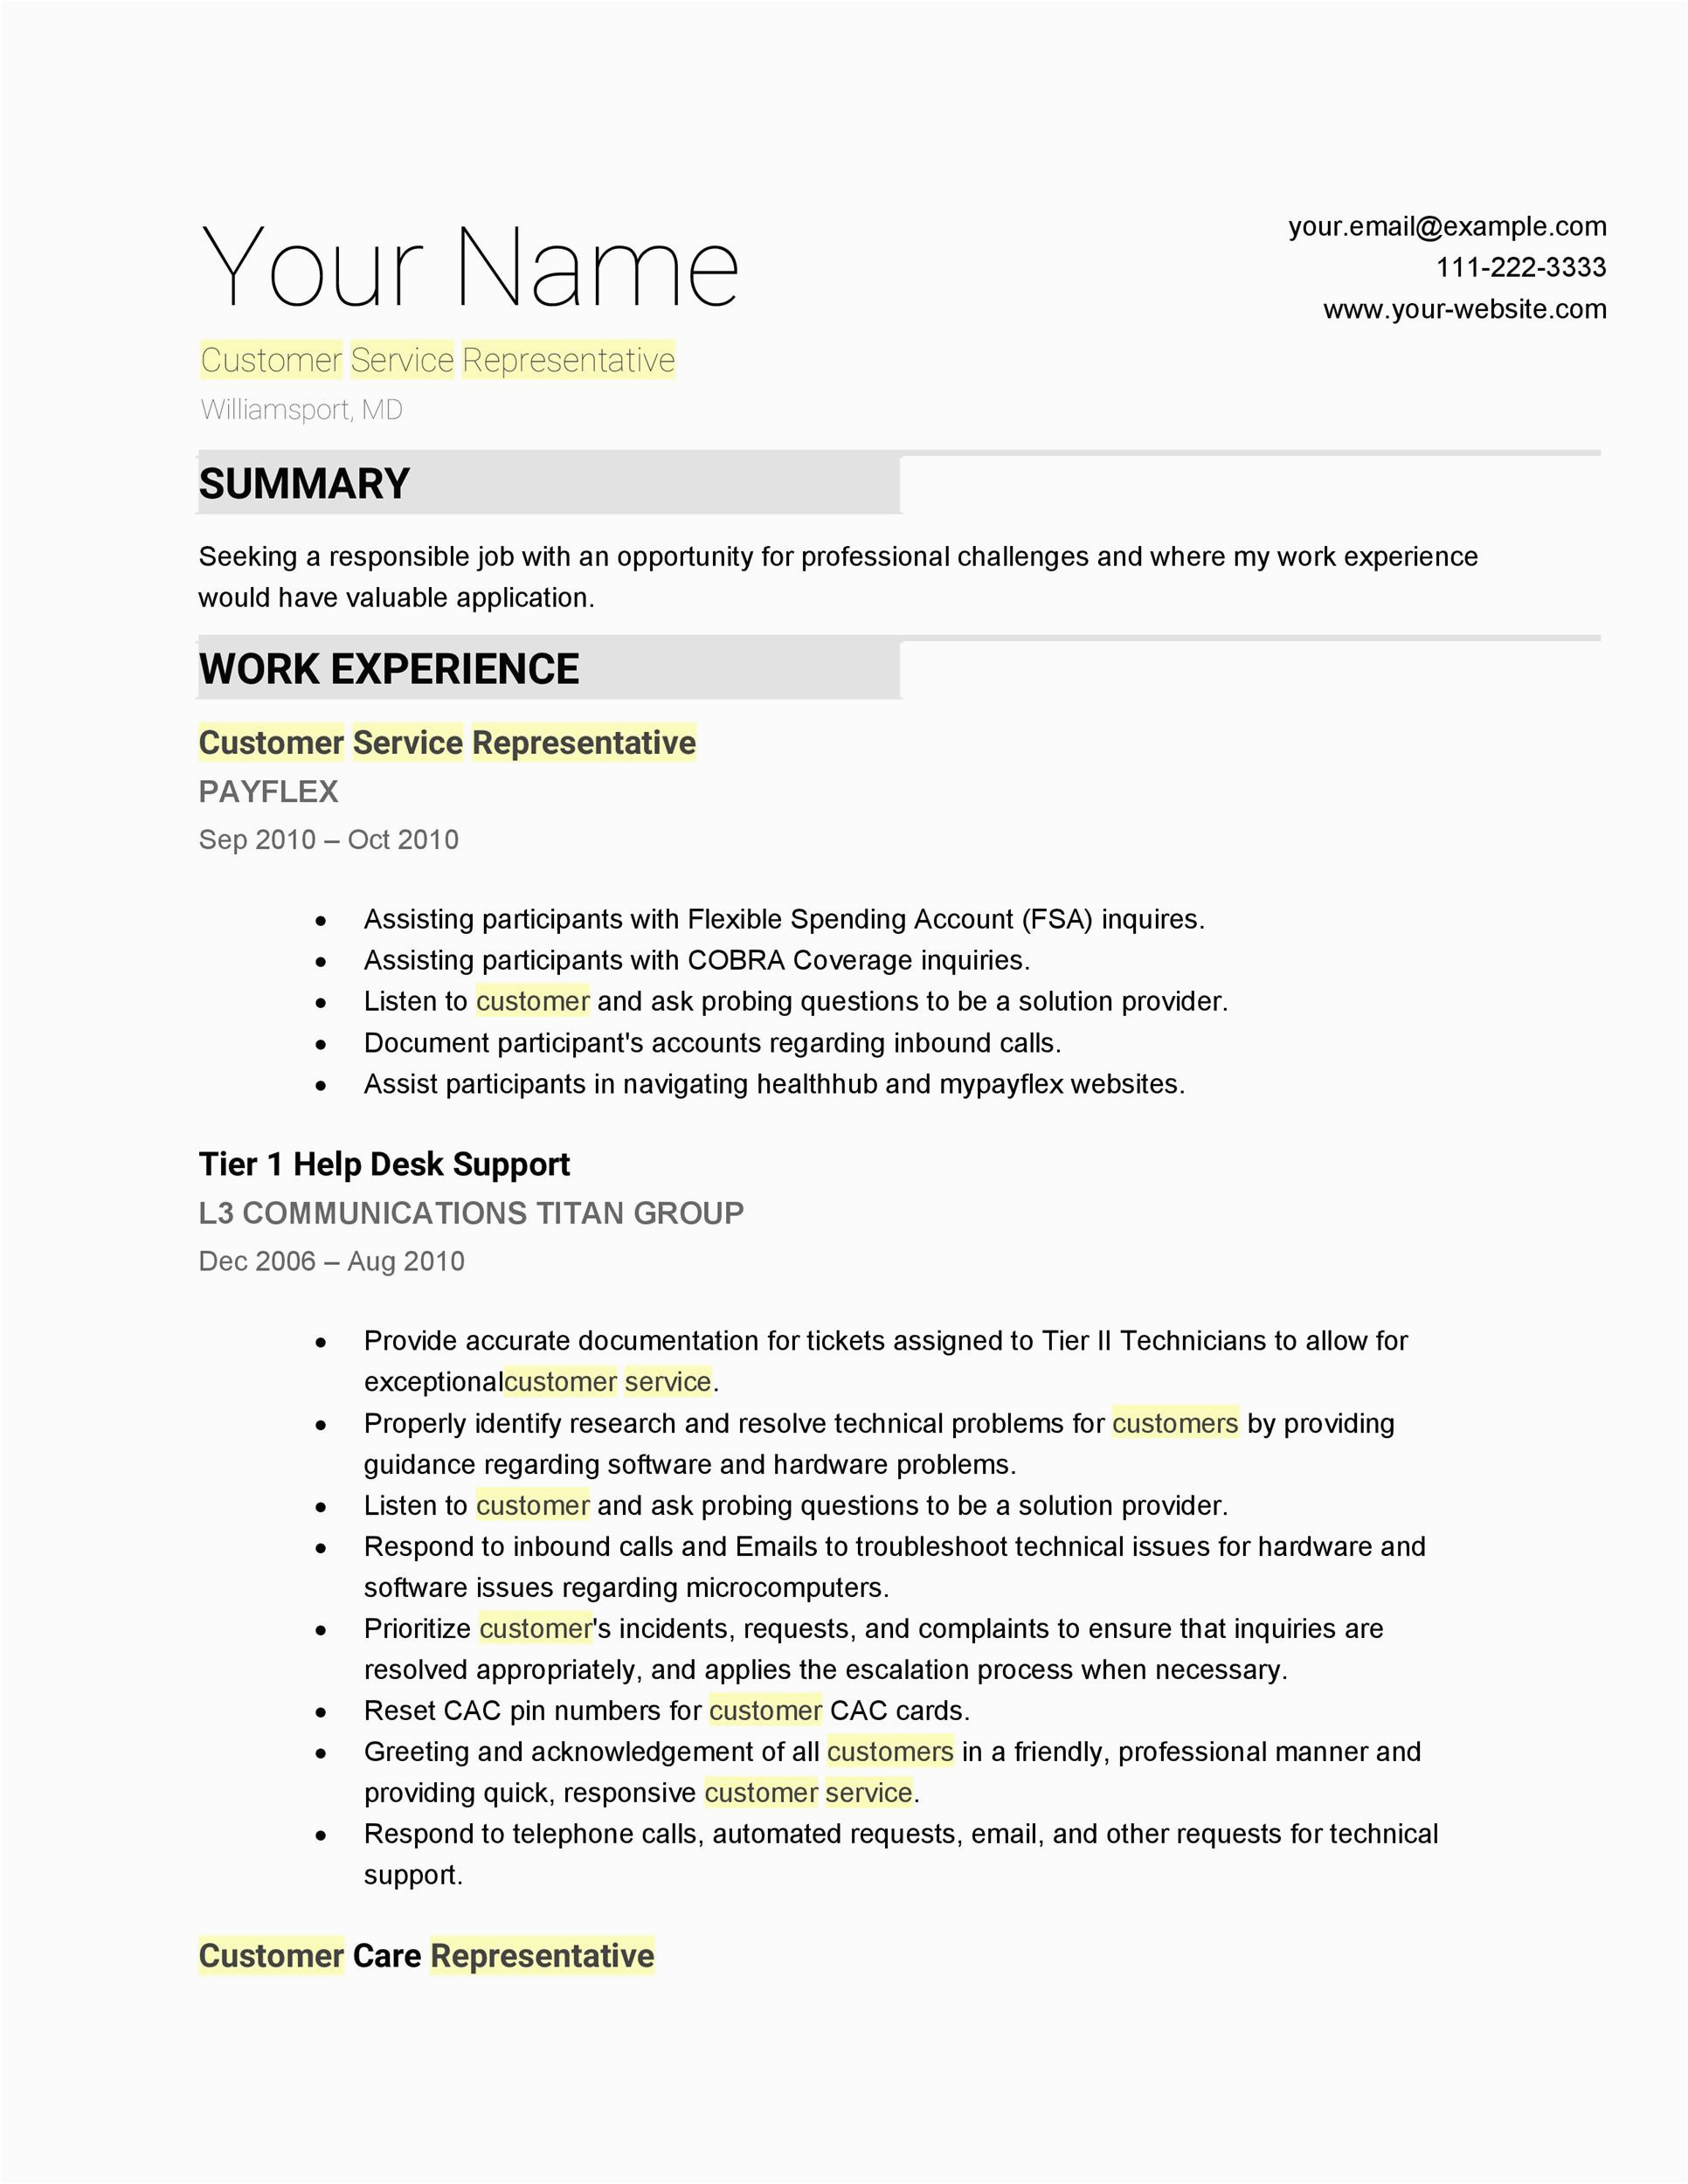 Professional Summary Resume Sample for Customer Service 30 Customer Service Resume Examples Template Lab